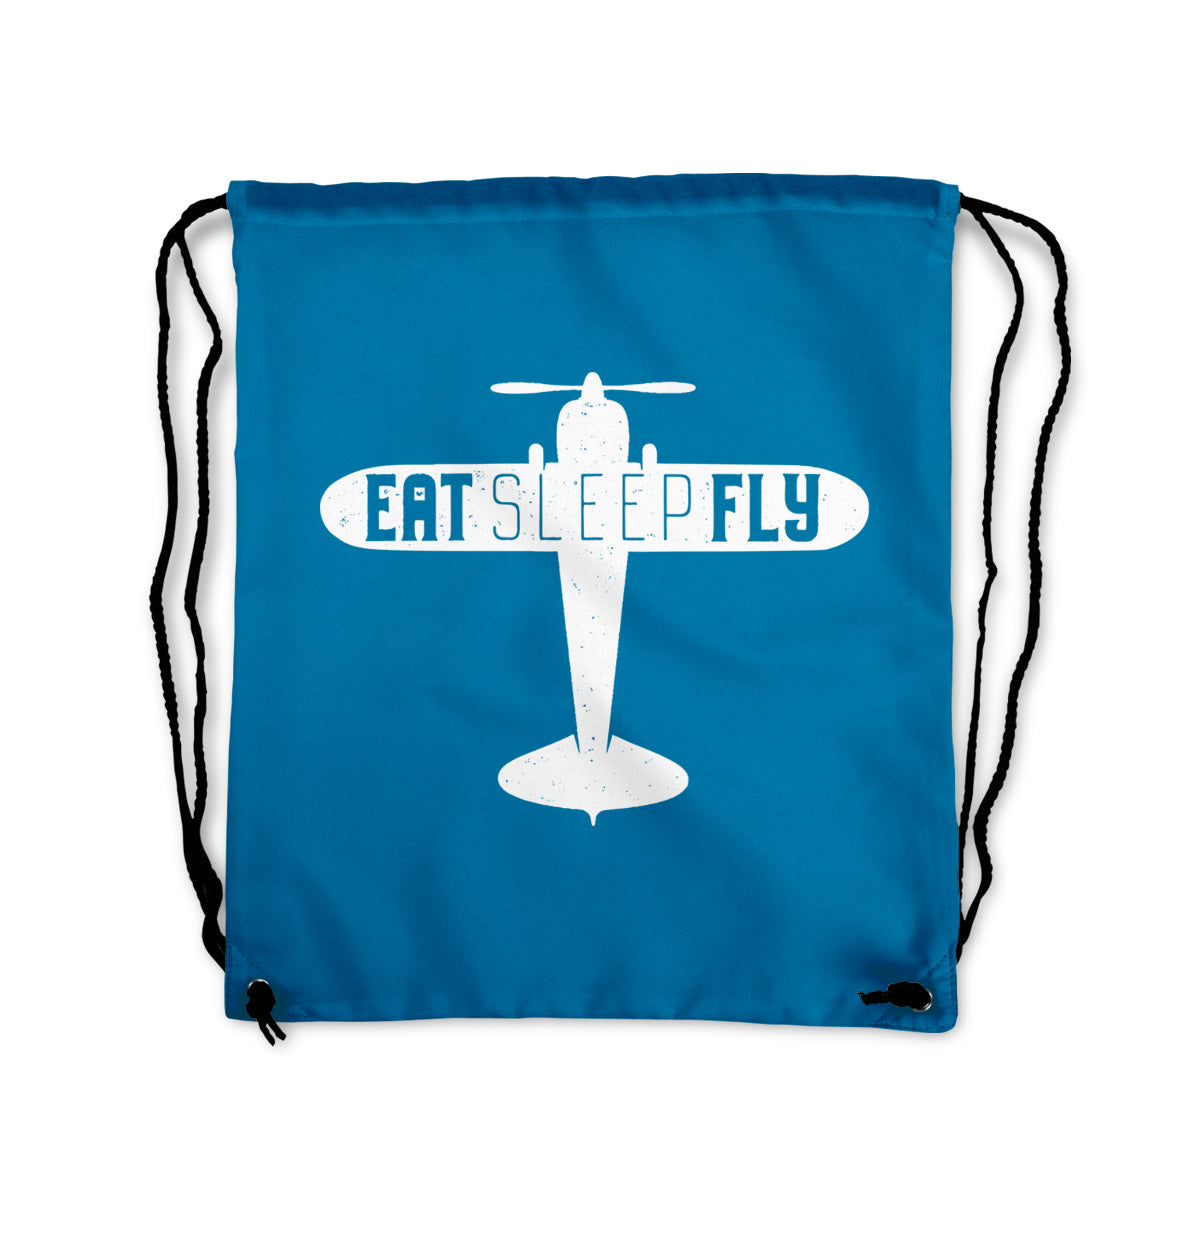 Eat Sleep Fly & Propeller Designed Drawstring Bags